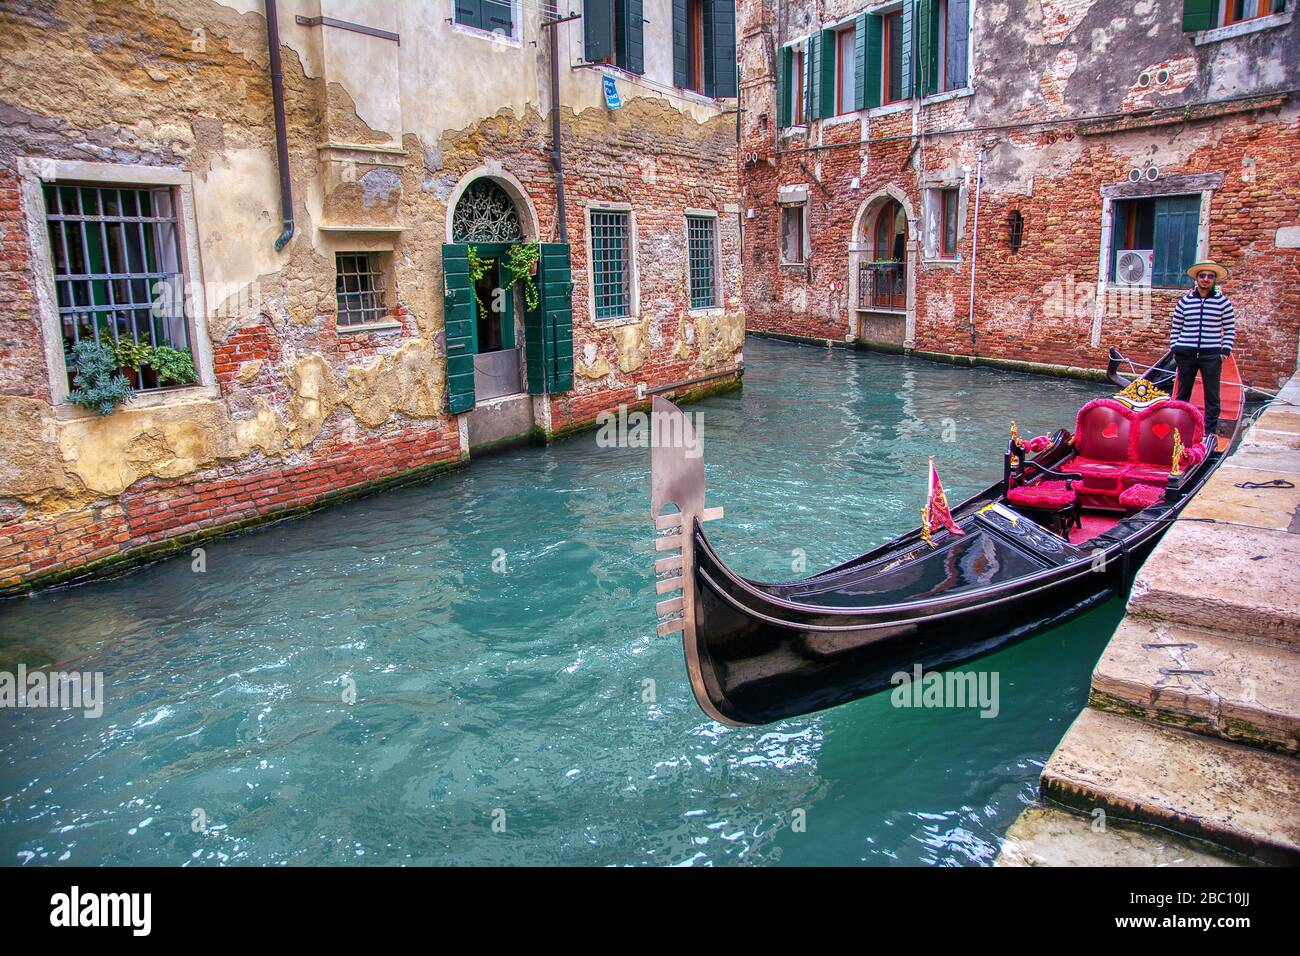 Venedig, Italien - 12. Oktober 2019: Gondelbahn am Kanal in Venedig, Italien. Gondelfahrt ist die beliebteste touristische Aktivität in Venedig. Stockfoto